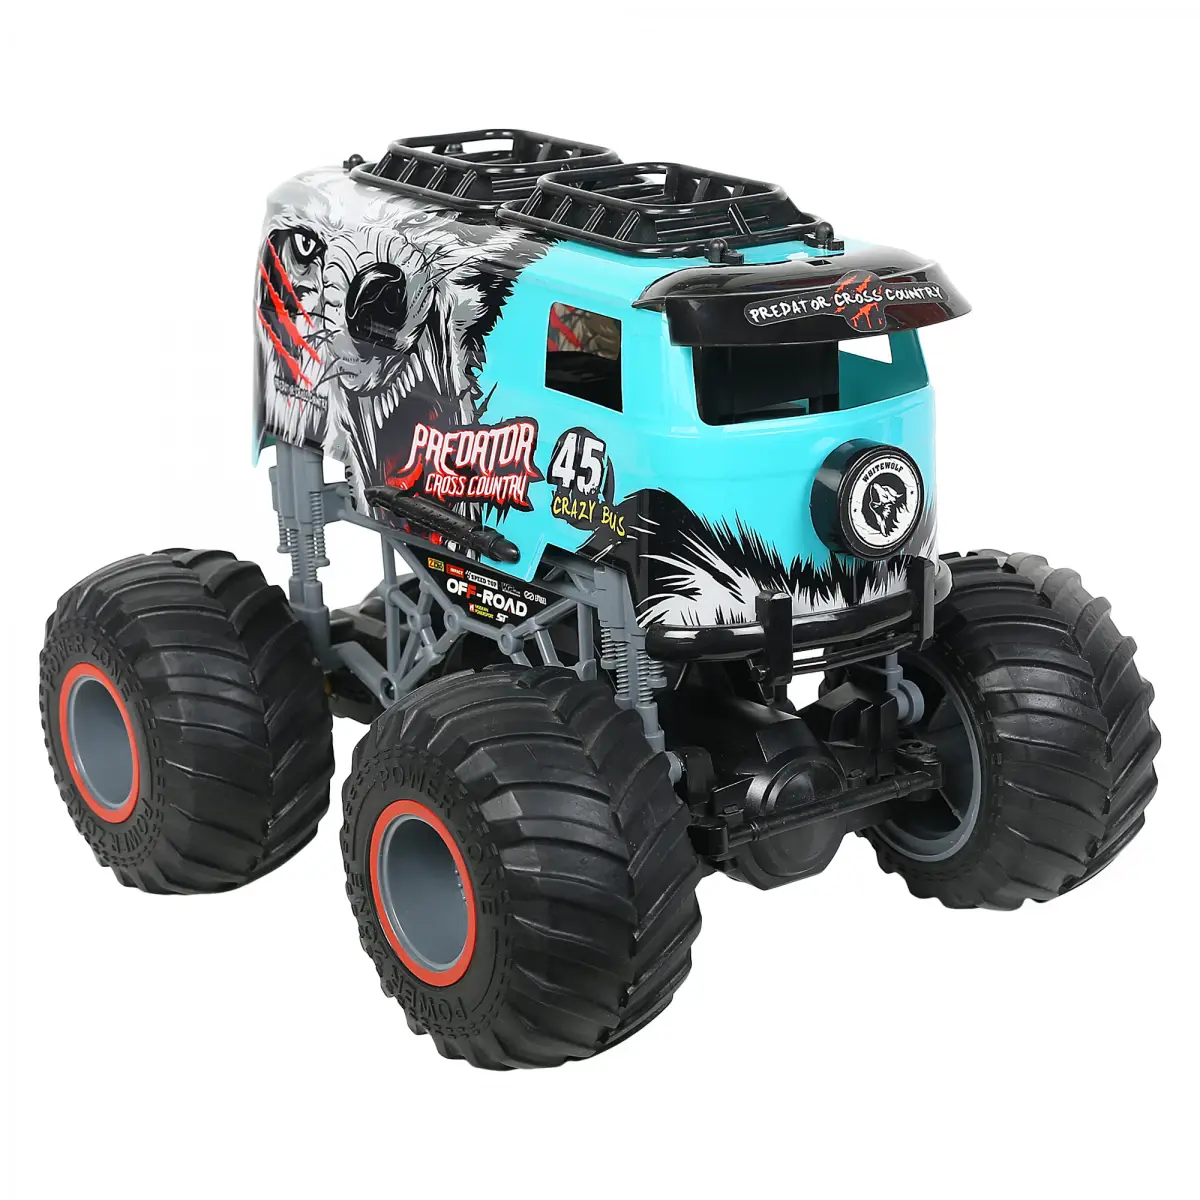 Ralleyz Forest Beast Racing Car, 2 Wheel Drive, Remote Control Toys, 8Y+, Blue